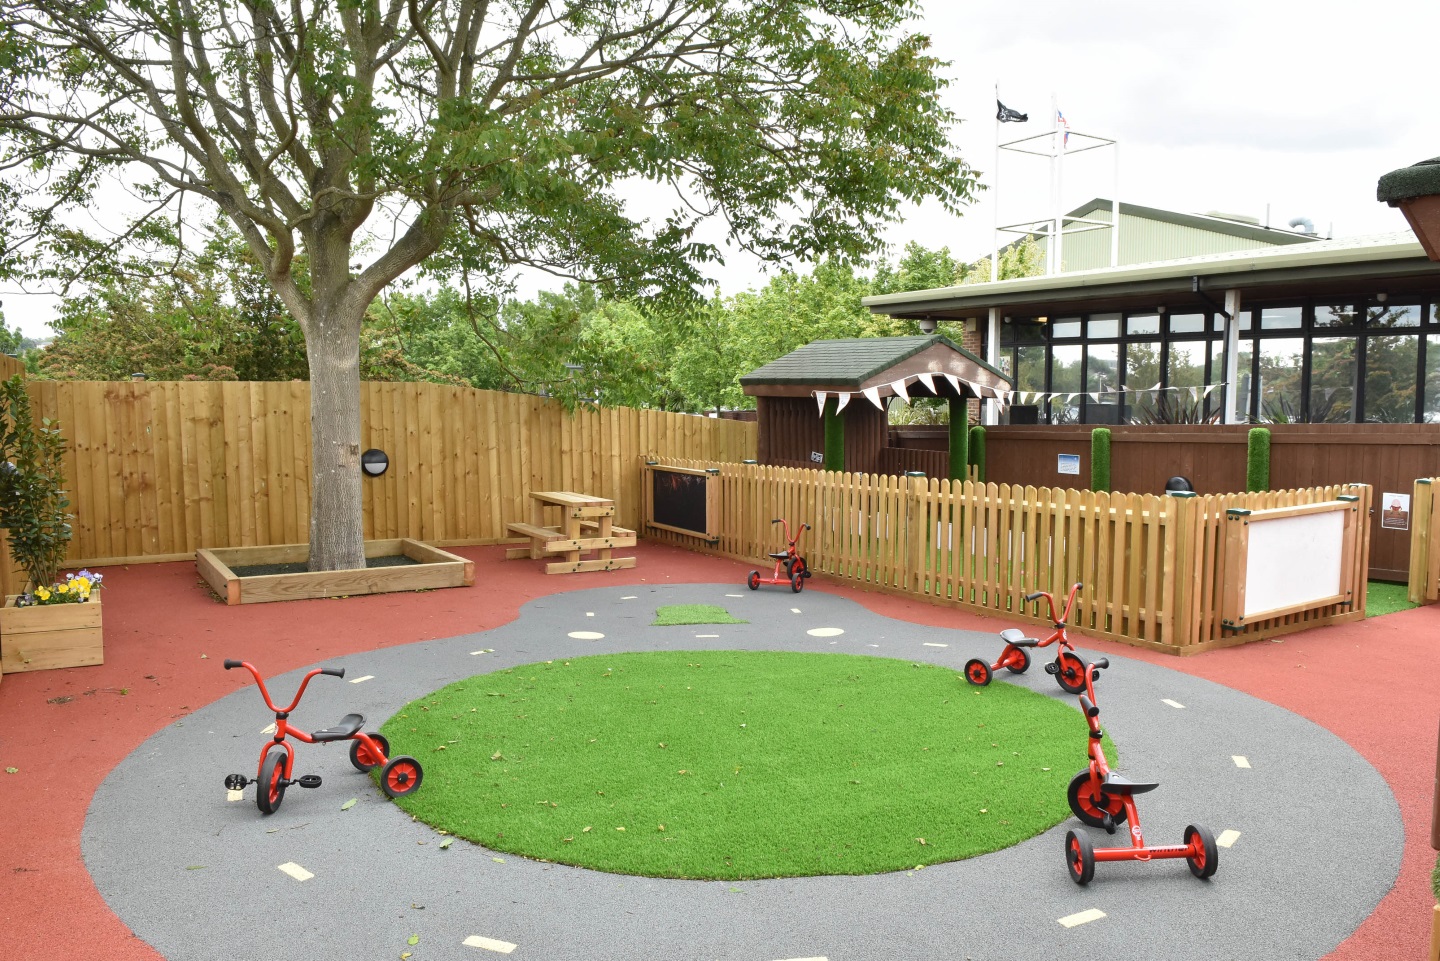 Asquith Raynes Park Day Nursery and Preschool